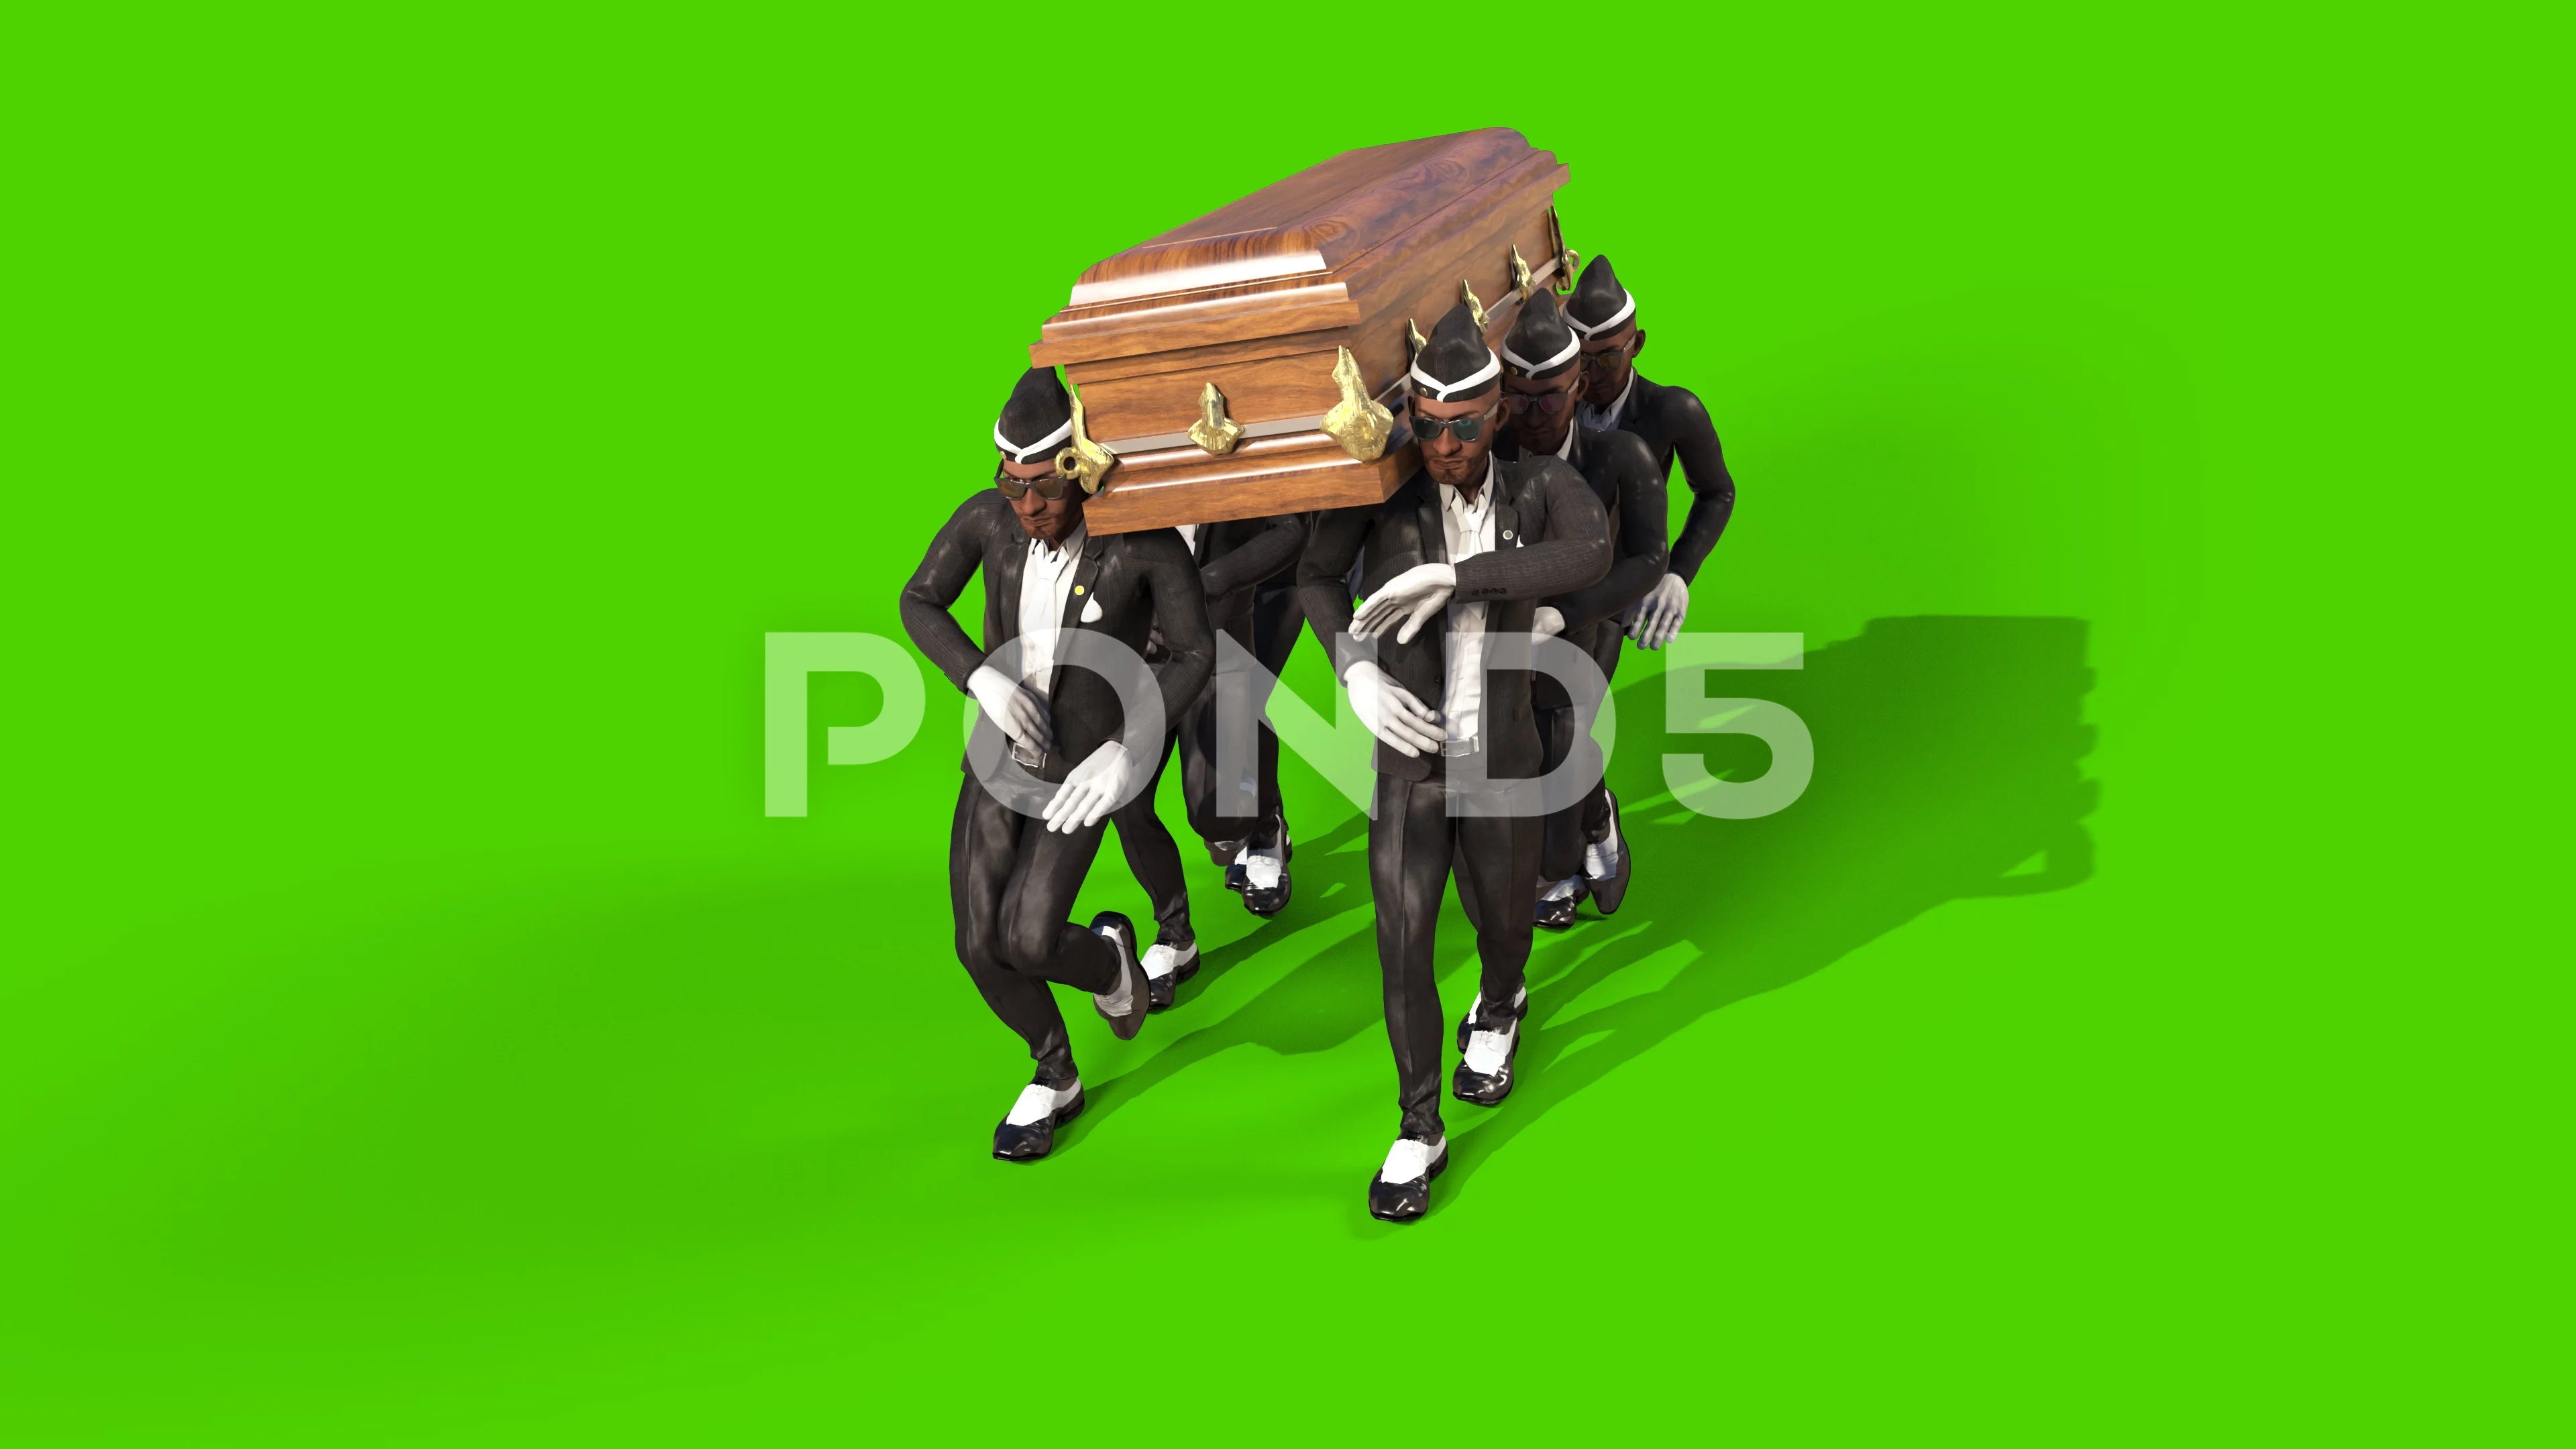 Coffin dance: the coffin meme 3d game. - Microsoft Apps